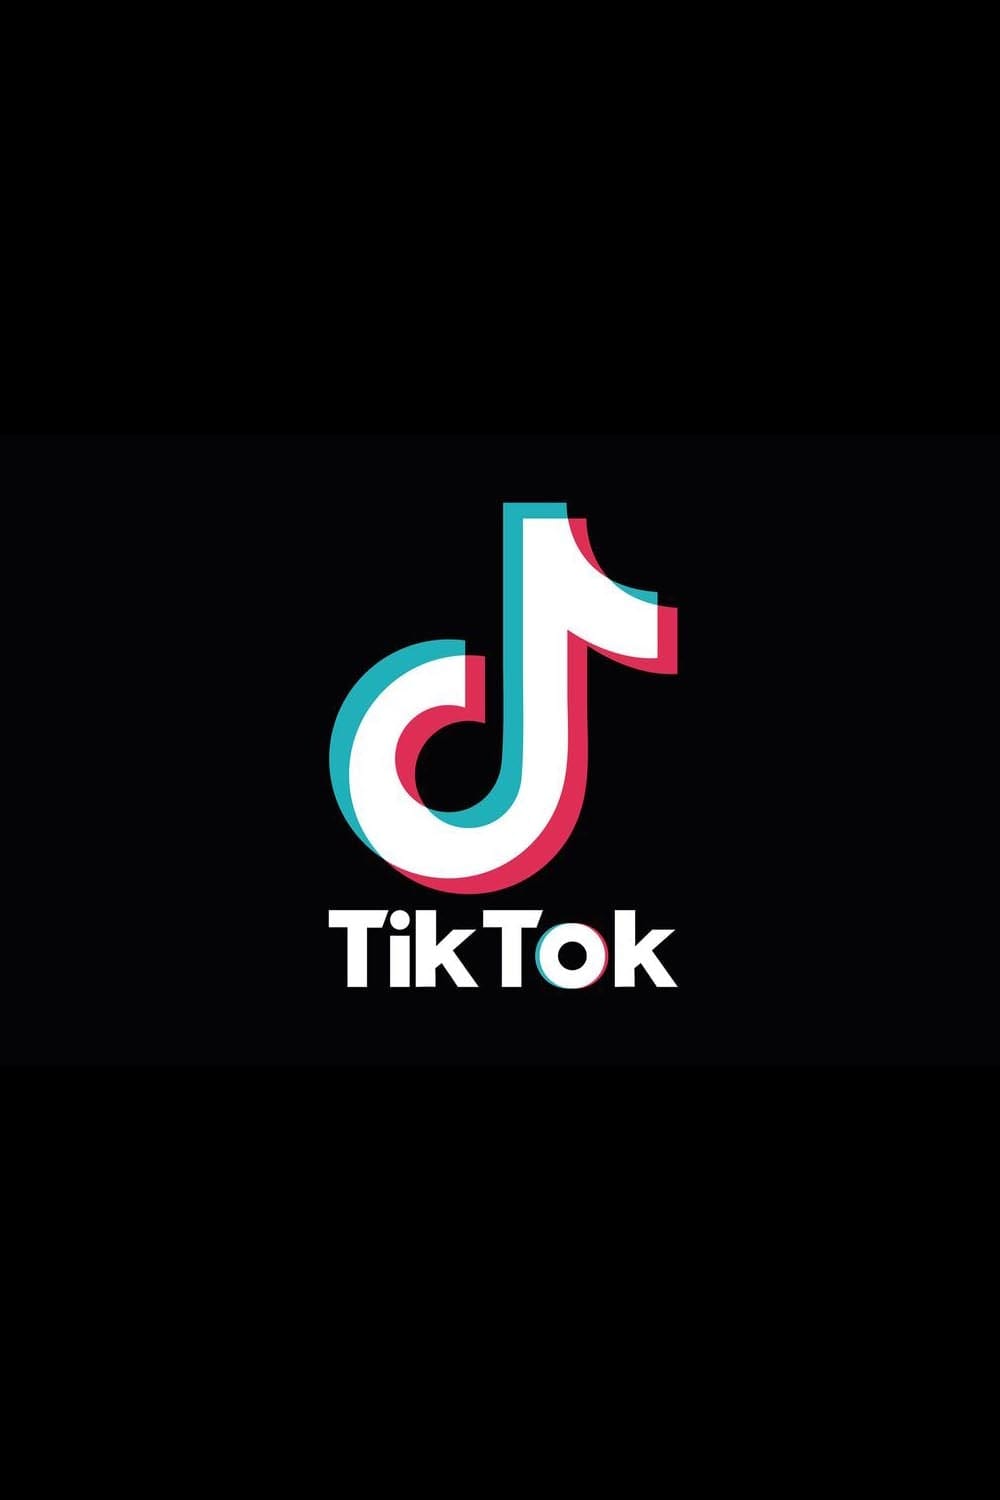 TikTok Trends // 5 types of video to create